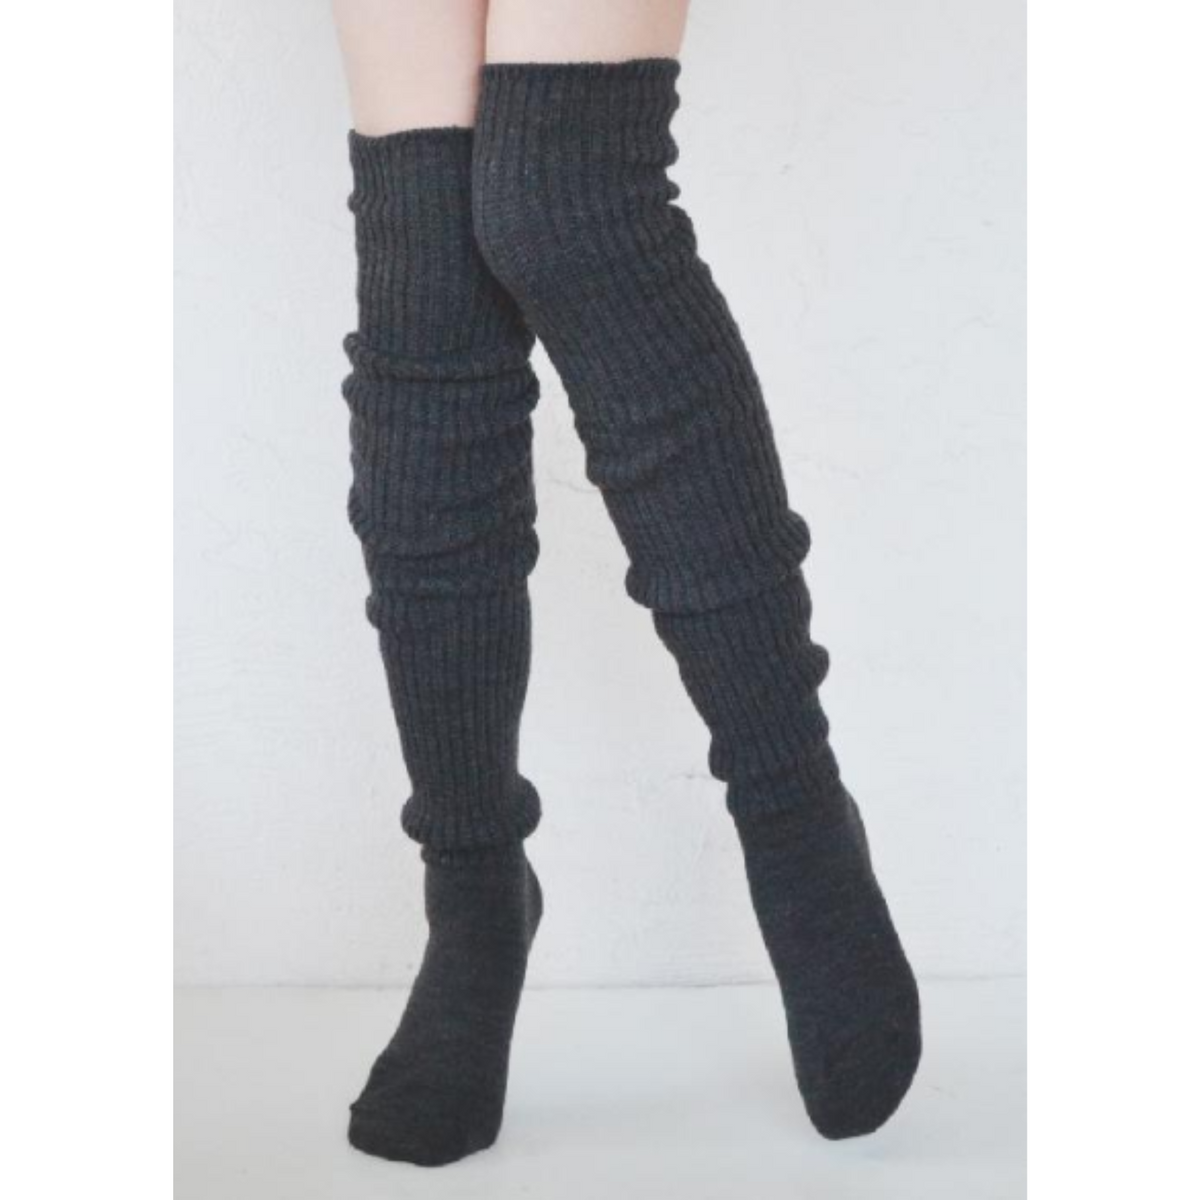 Tabbisocks Scrunchy Over the Knee women&#39;s socks shown in Dark grey color on model.